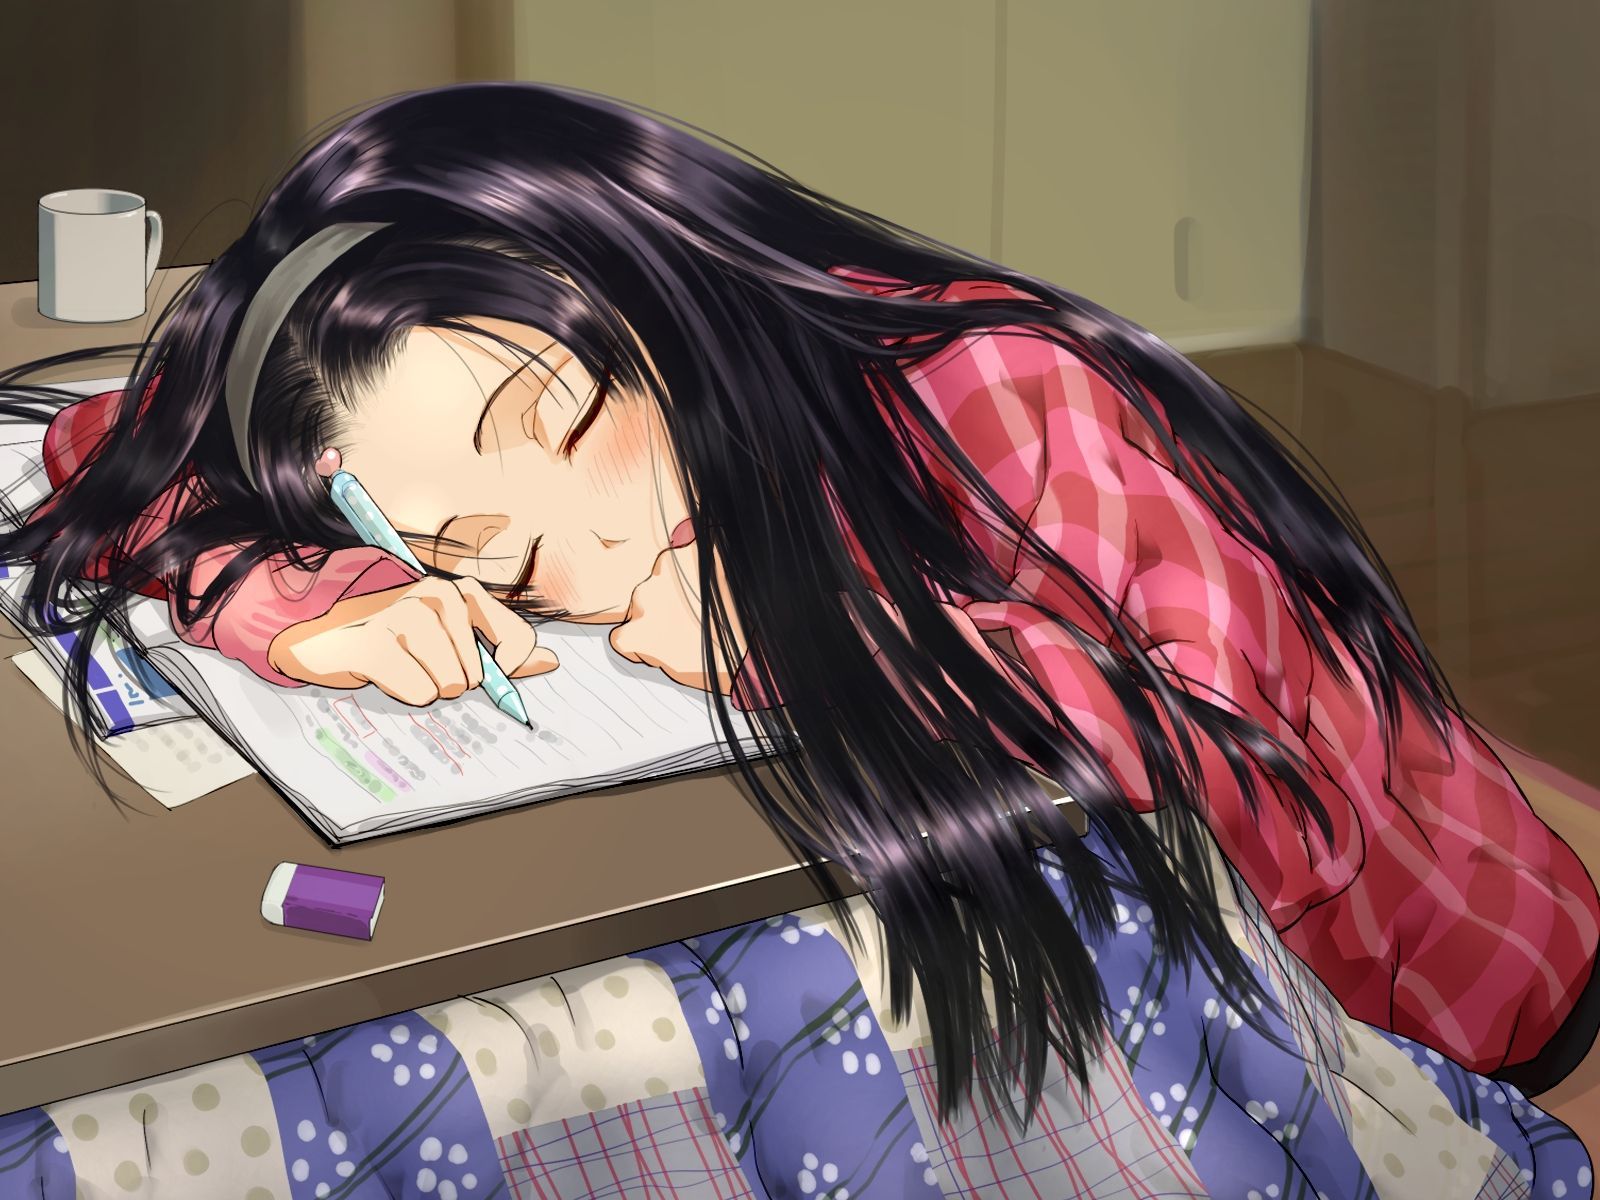 NovelAI Tired Anime Girl by DarkPrncsAI on DeviantArt